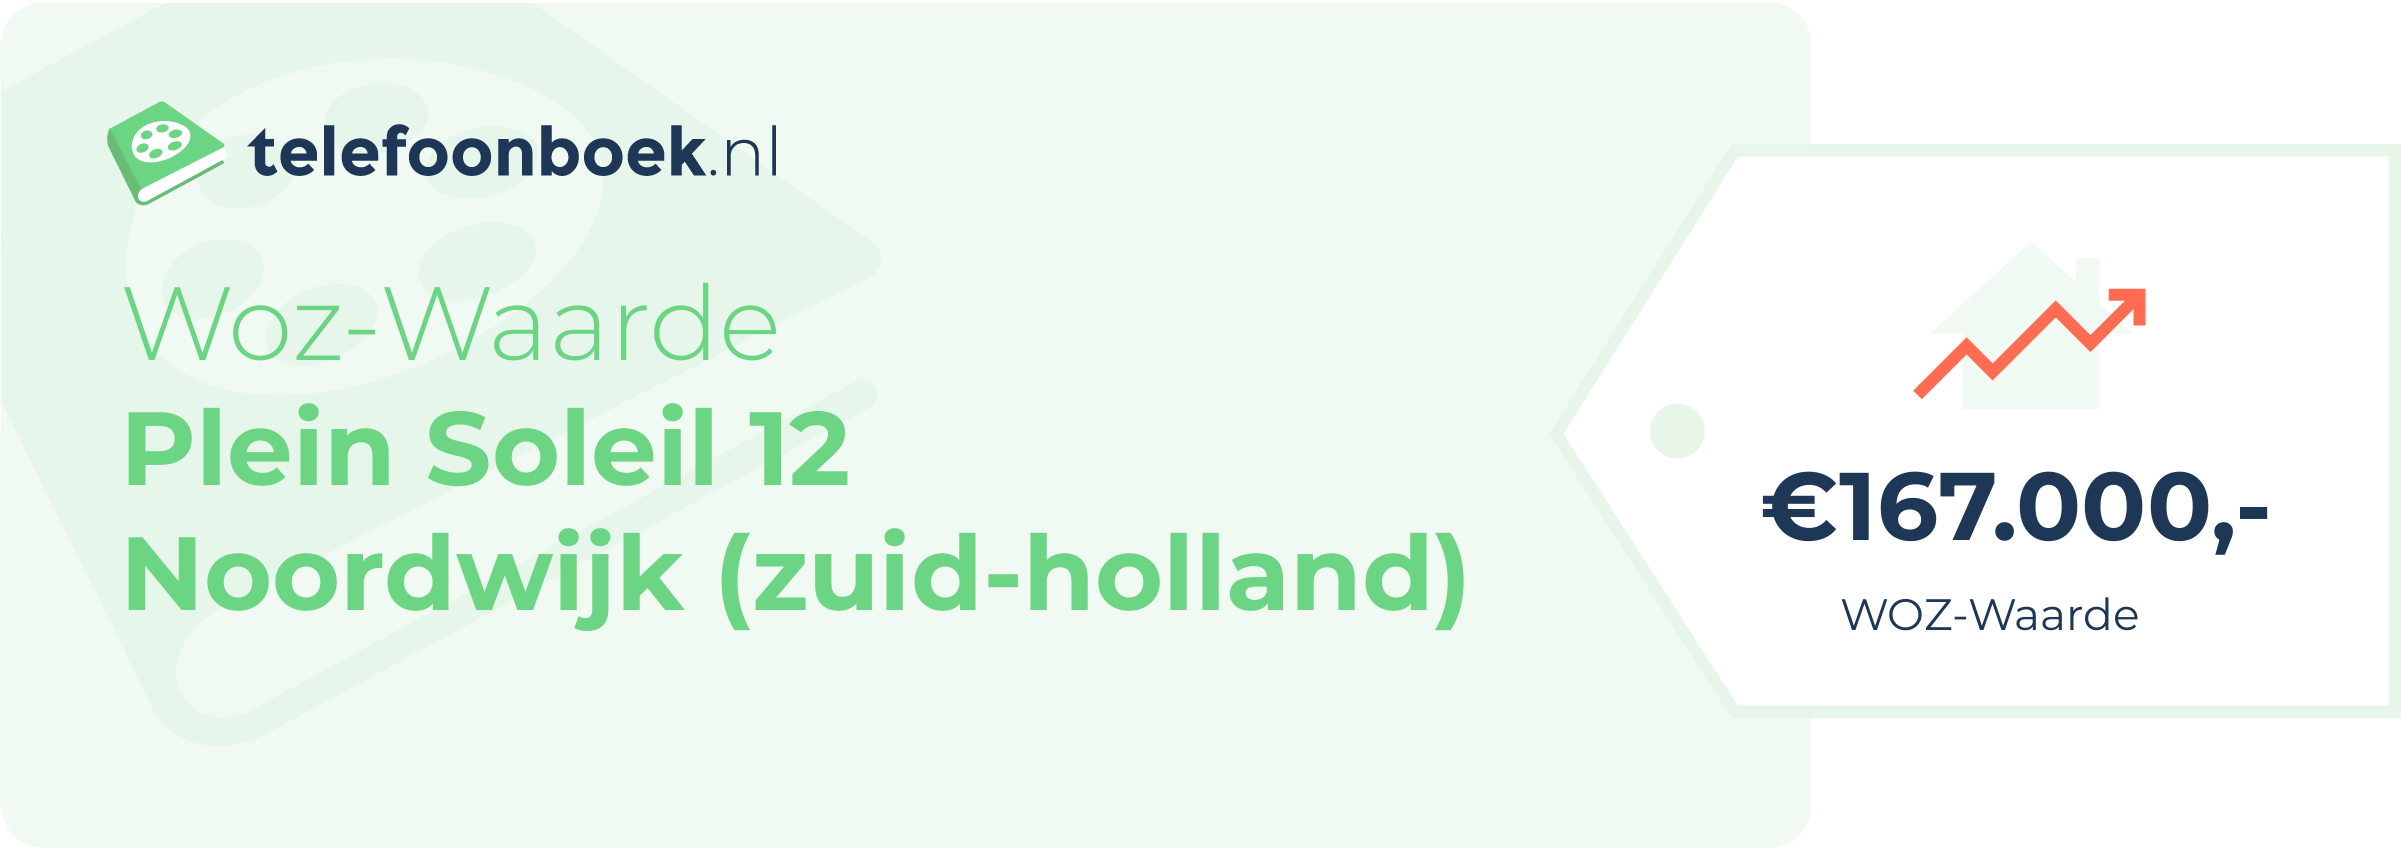 WOZ-waarde Plein Soleil 12 Noordwijk (Zuid-Holland)